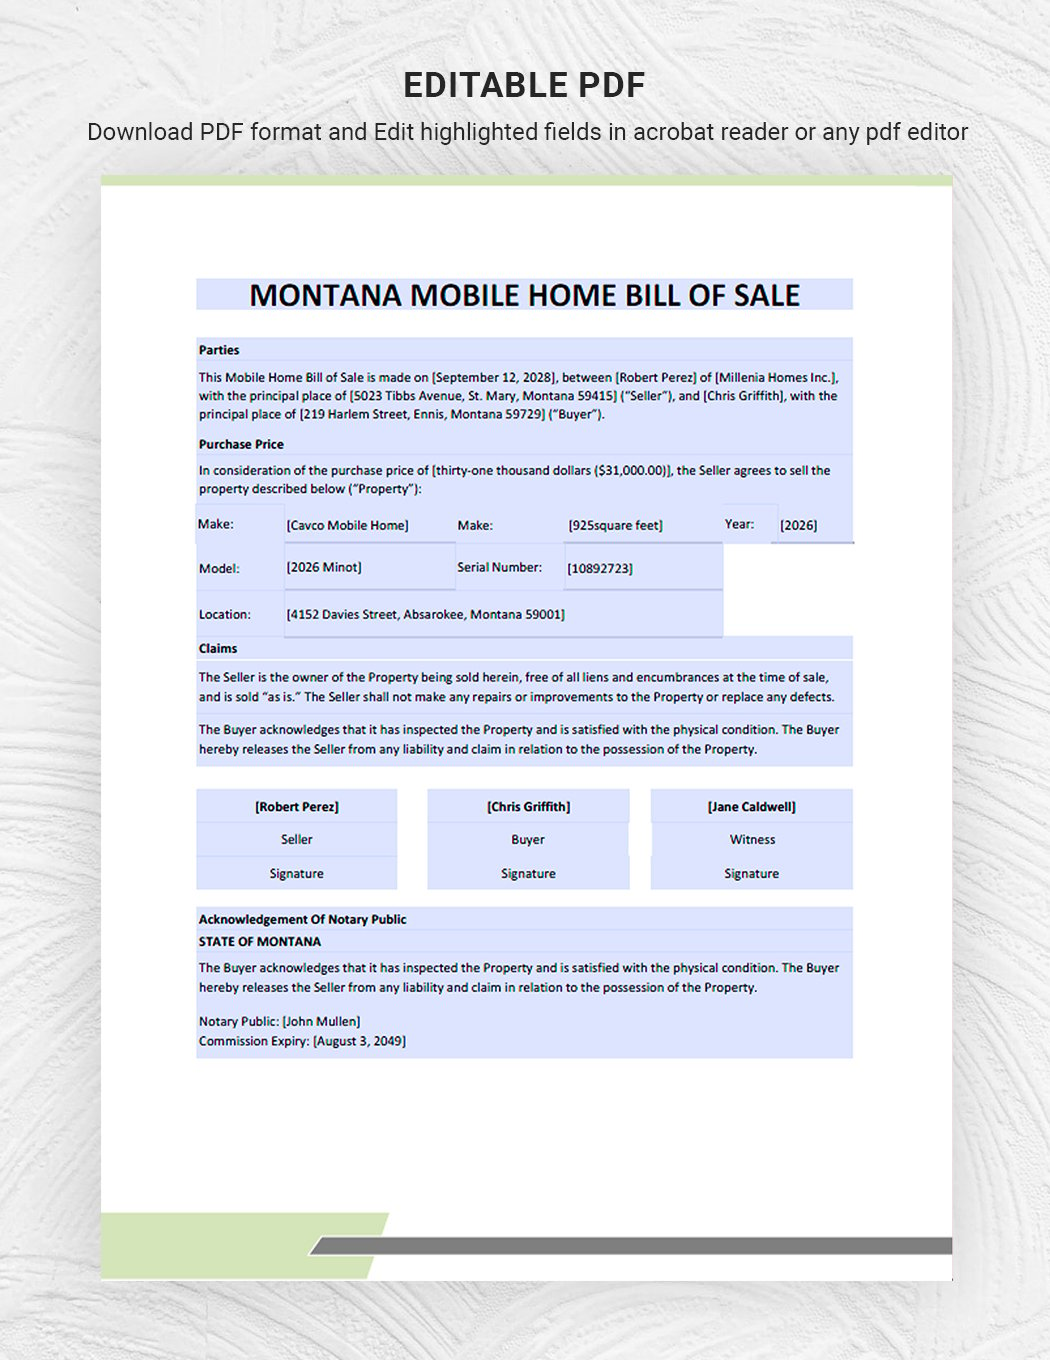 Montana Mobile Home Bill of Sale Template